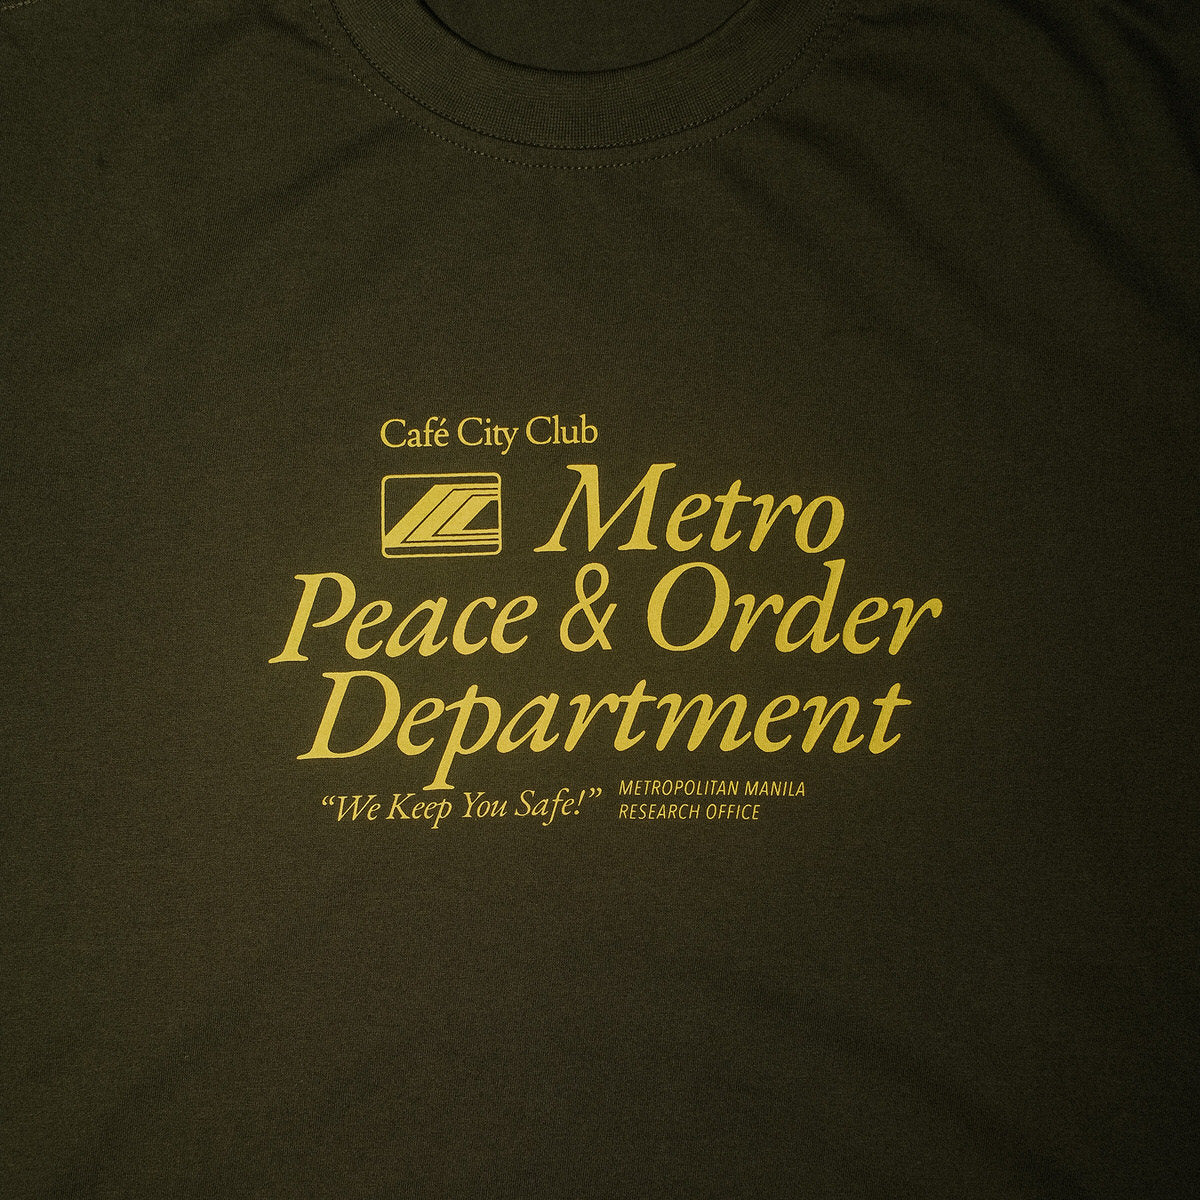 Metro Peace & Order T-Shirt "Moss"